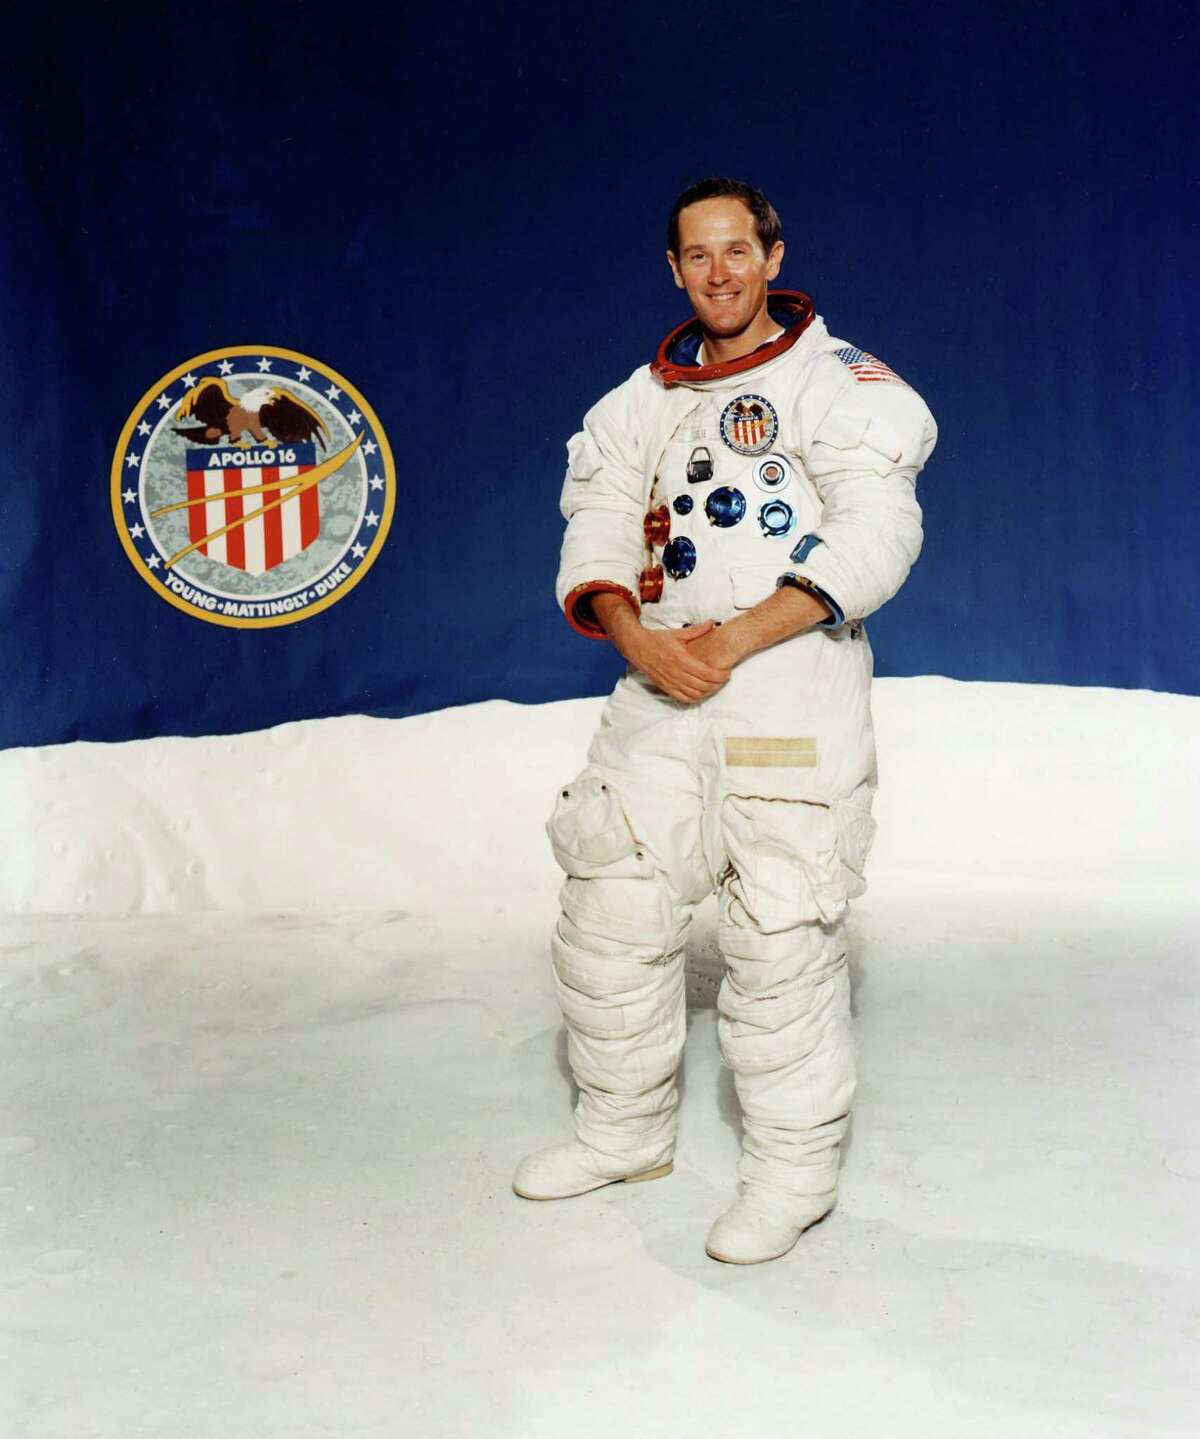 Duke's official astronaut photo.